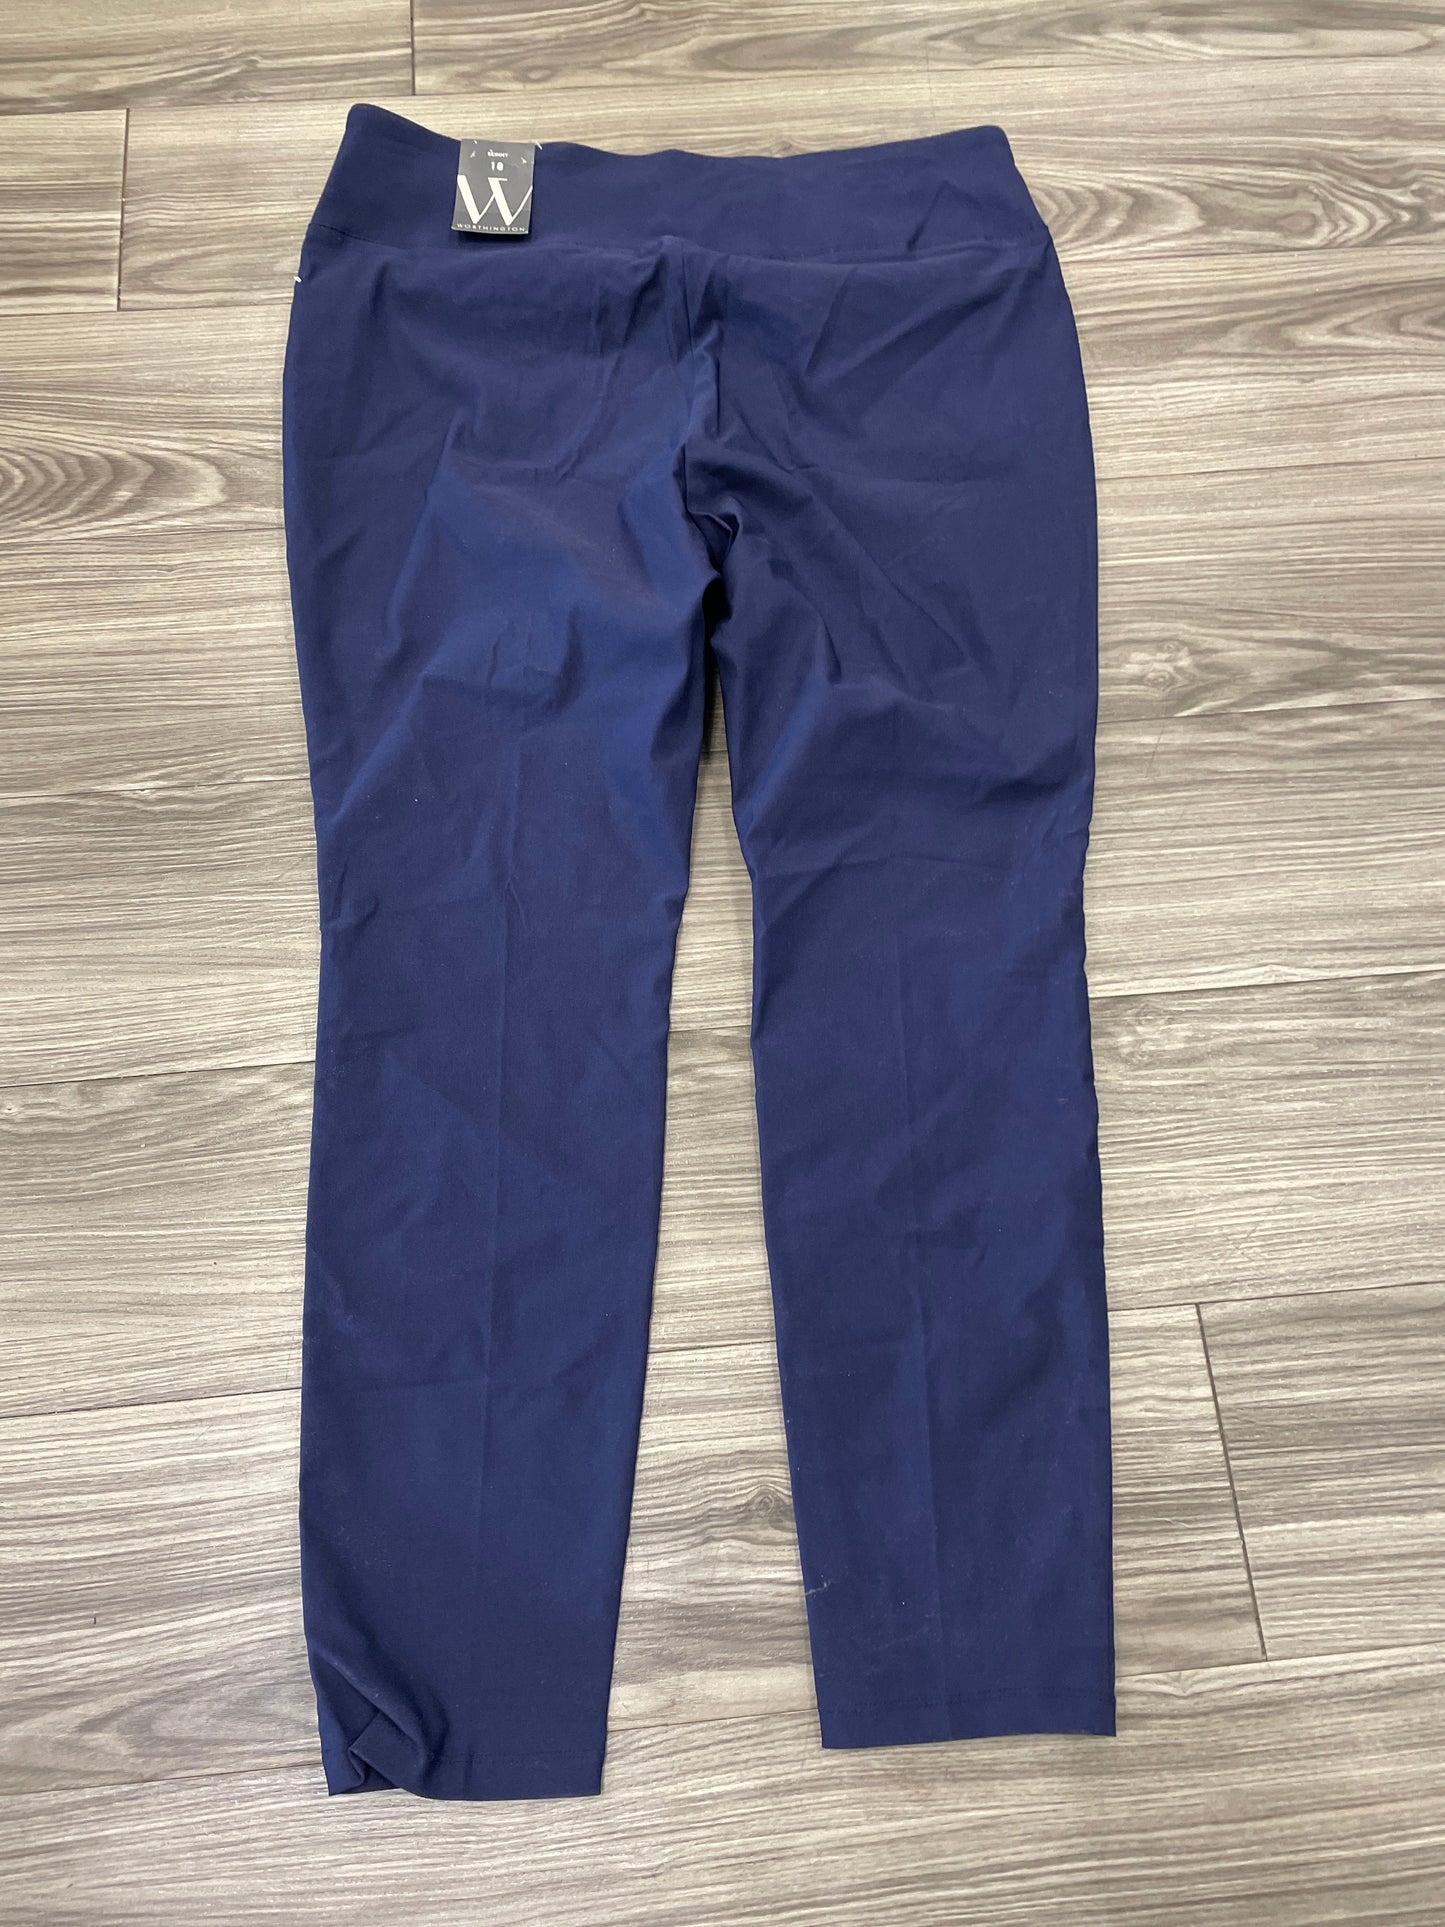 Navy Pants Dress Worthington, Size 18